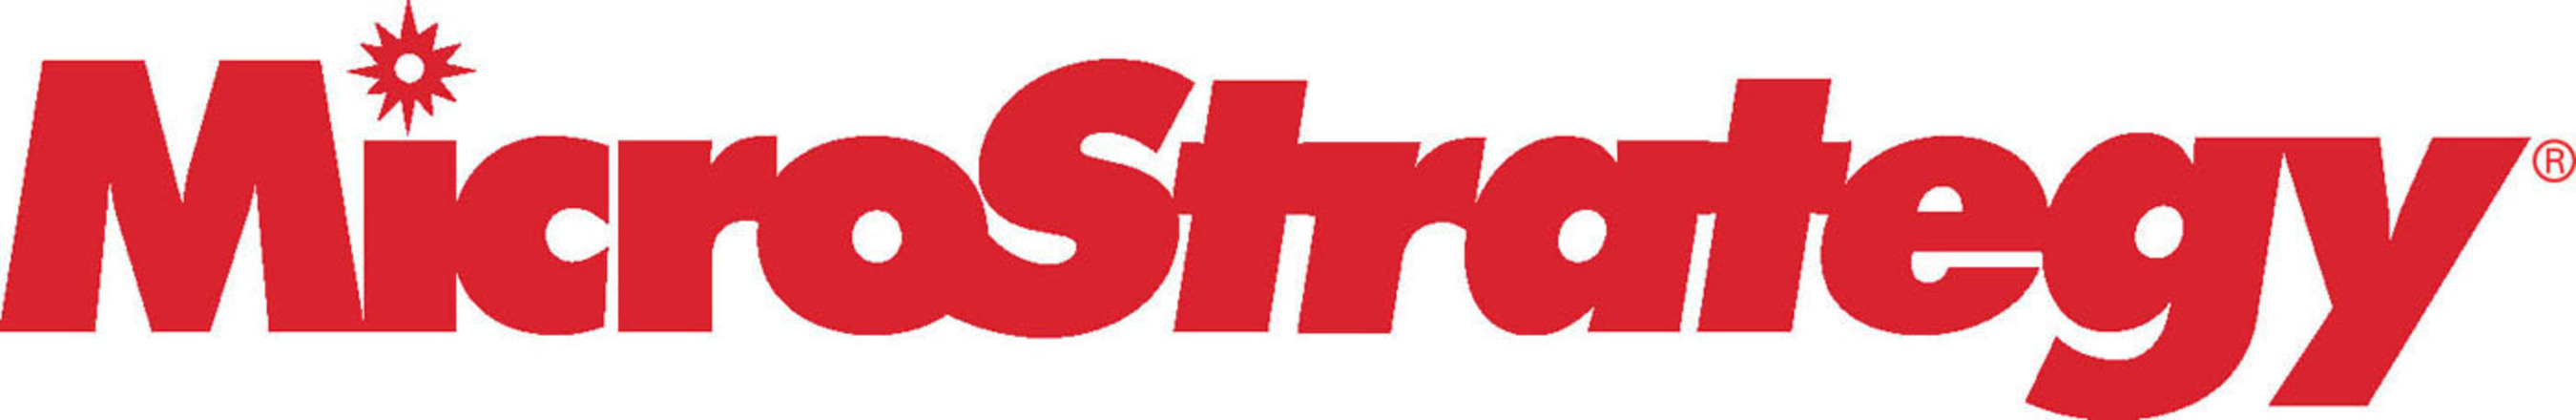 MicroStrategy logo. (PRNewsFoto/MicroStrategy Incorporated)